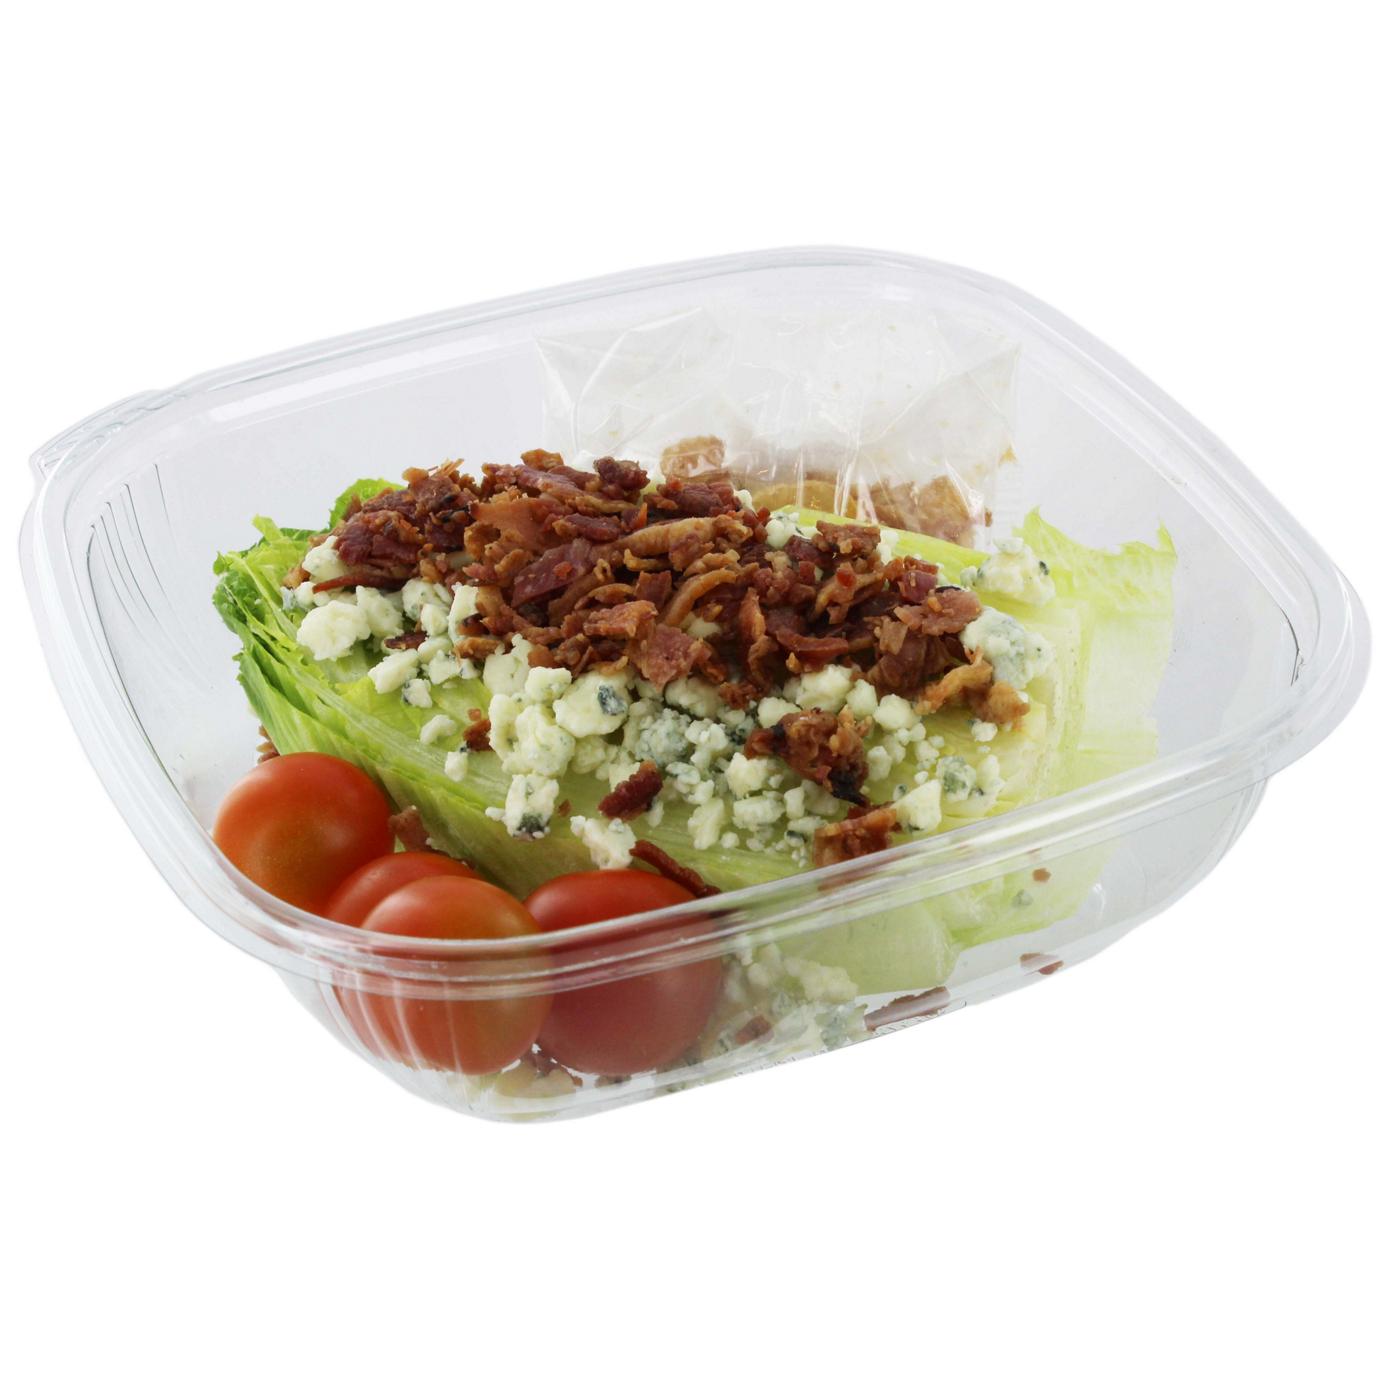 H-E-B Chopped Salad Bowl - Wedge Style - Shop Salads at H-E-B